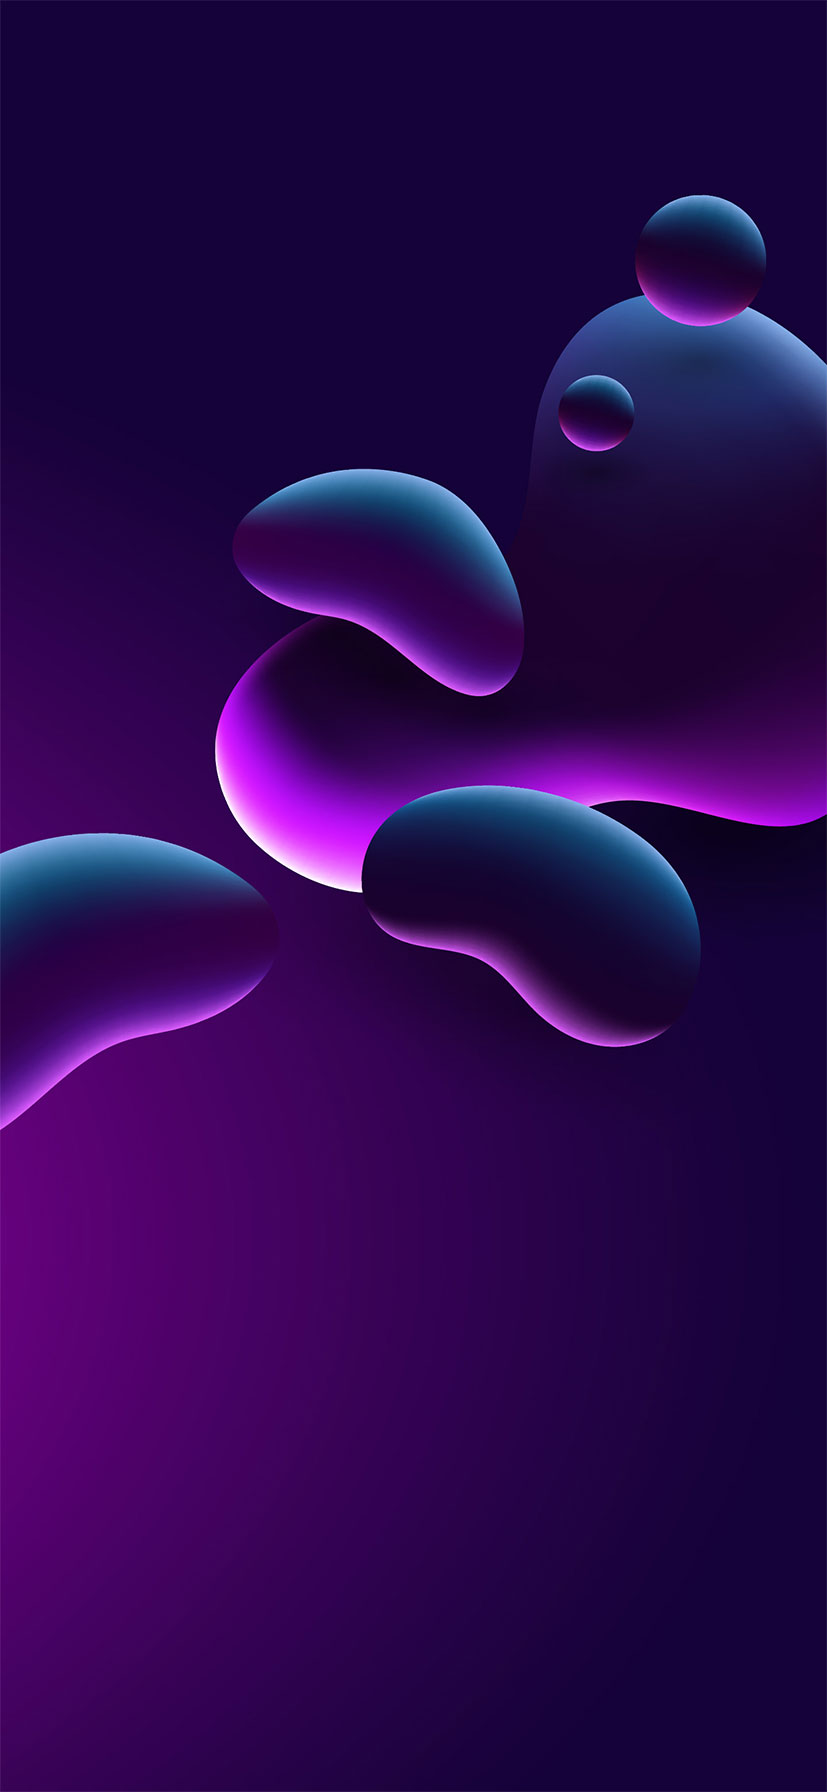 ios 11 wallpaper,violet,purple,blue,design,organism